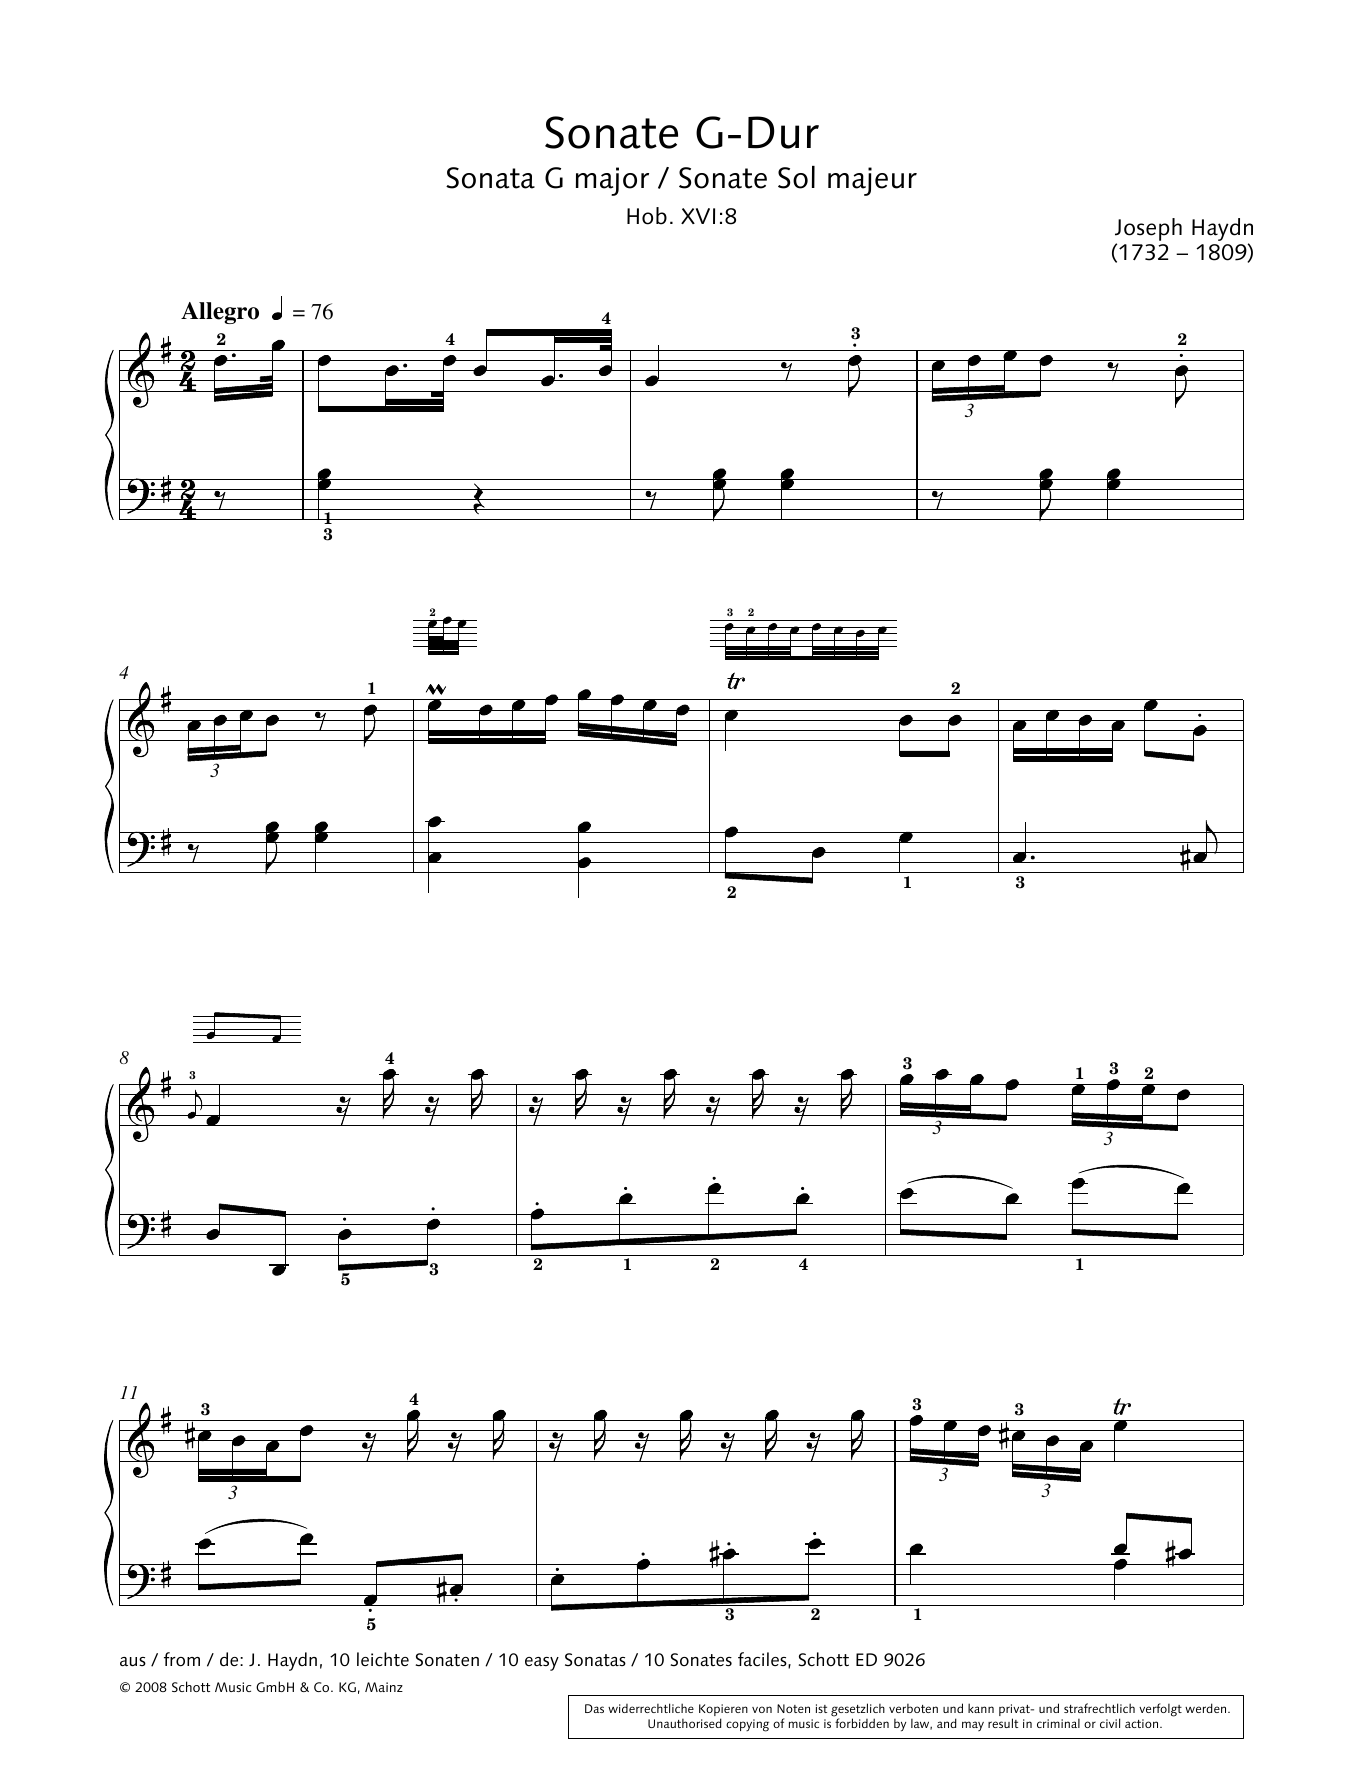 Hans-Gunter Heumann Sonata in G Major Sheet Music Notes & Chords for Piano Solo - Download or Print PDF